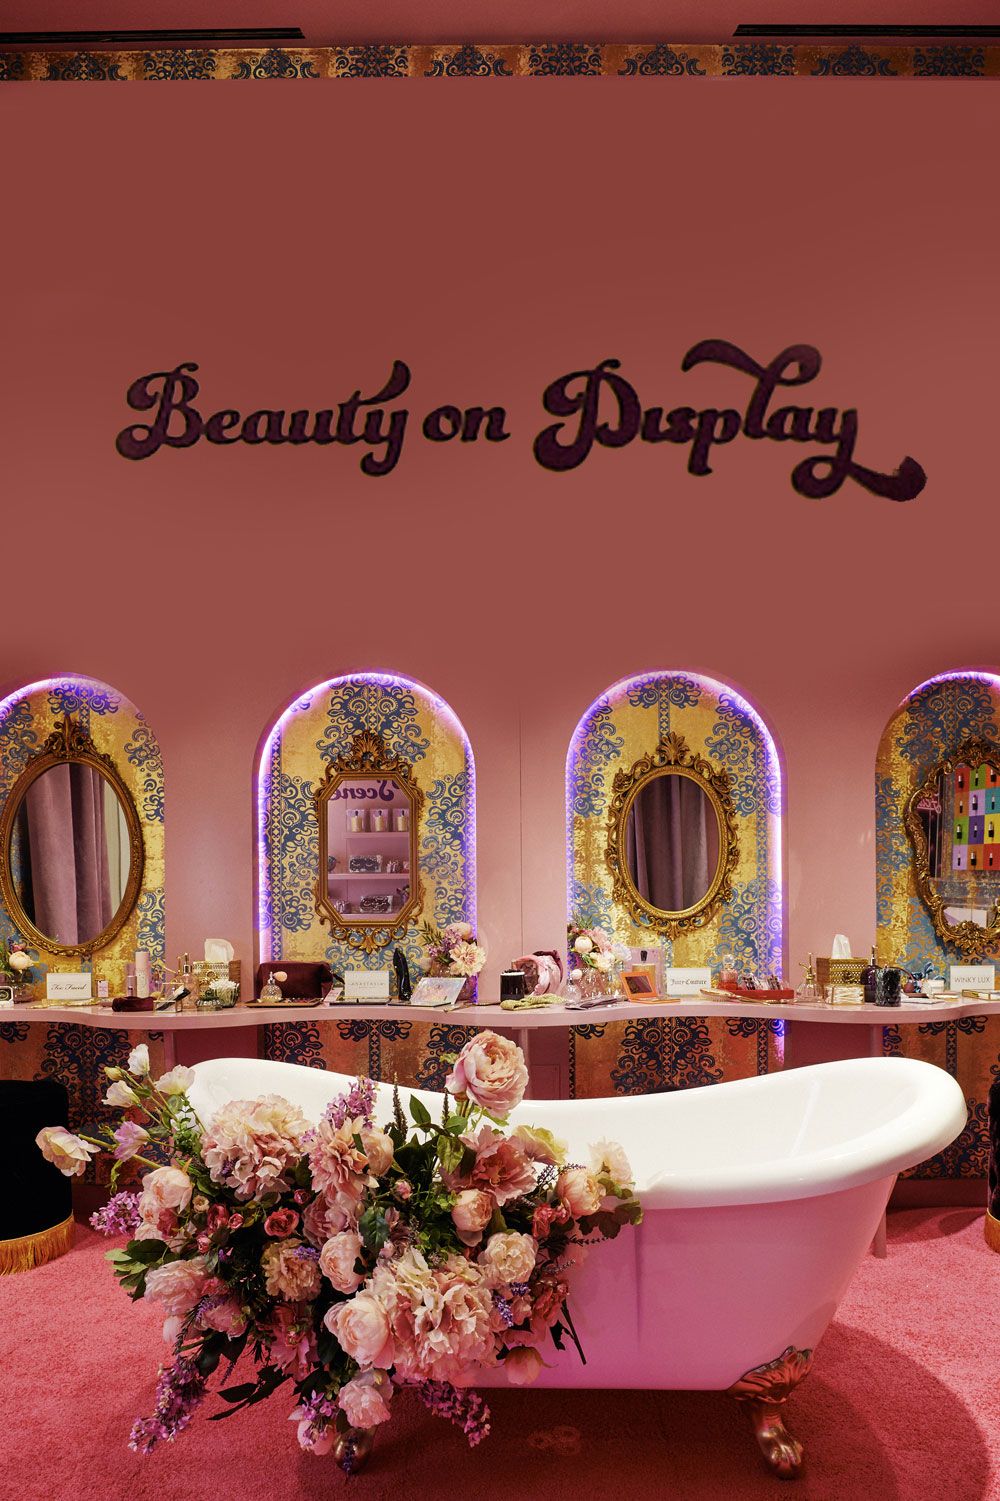 Macy’s “Beauty on Display”